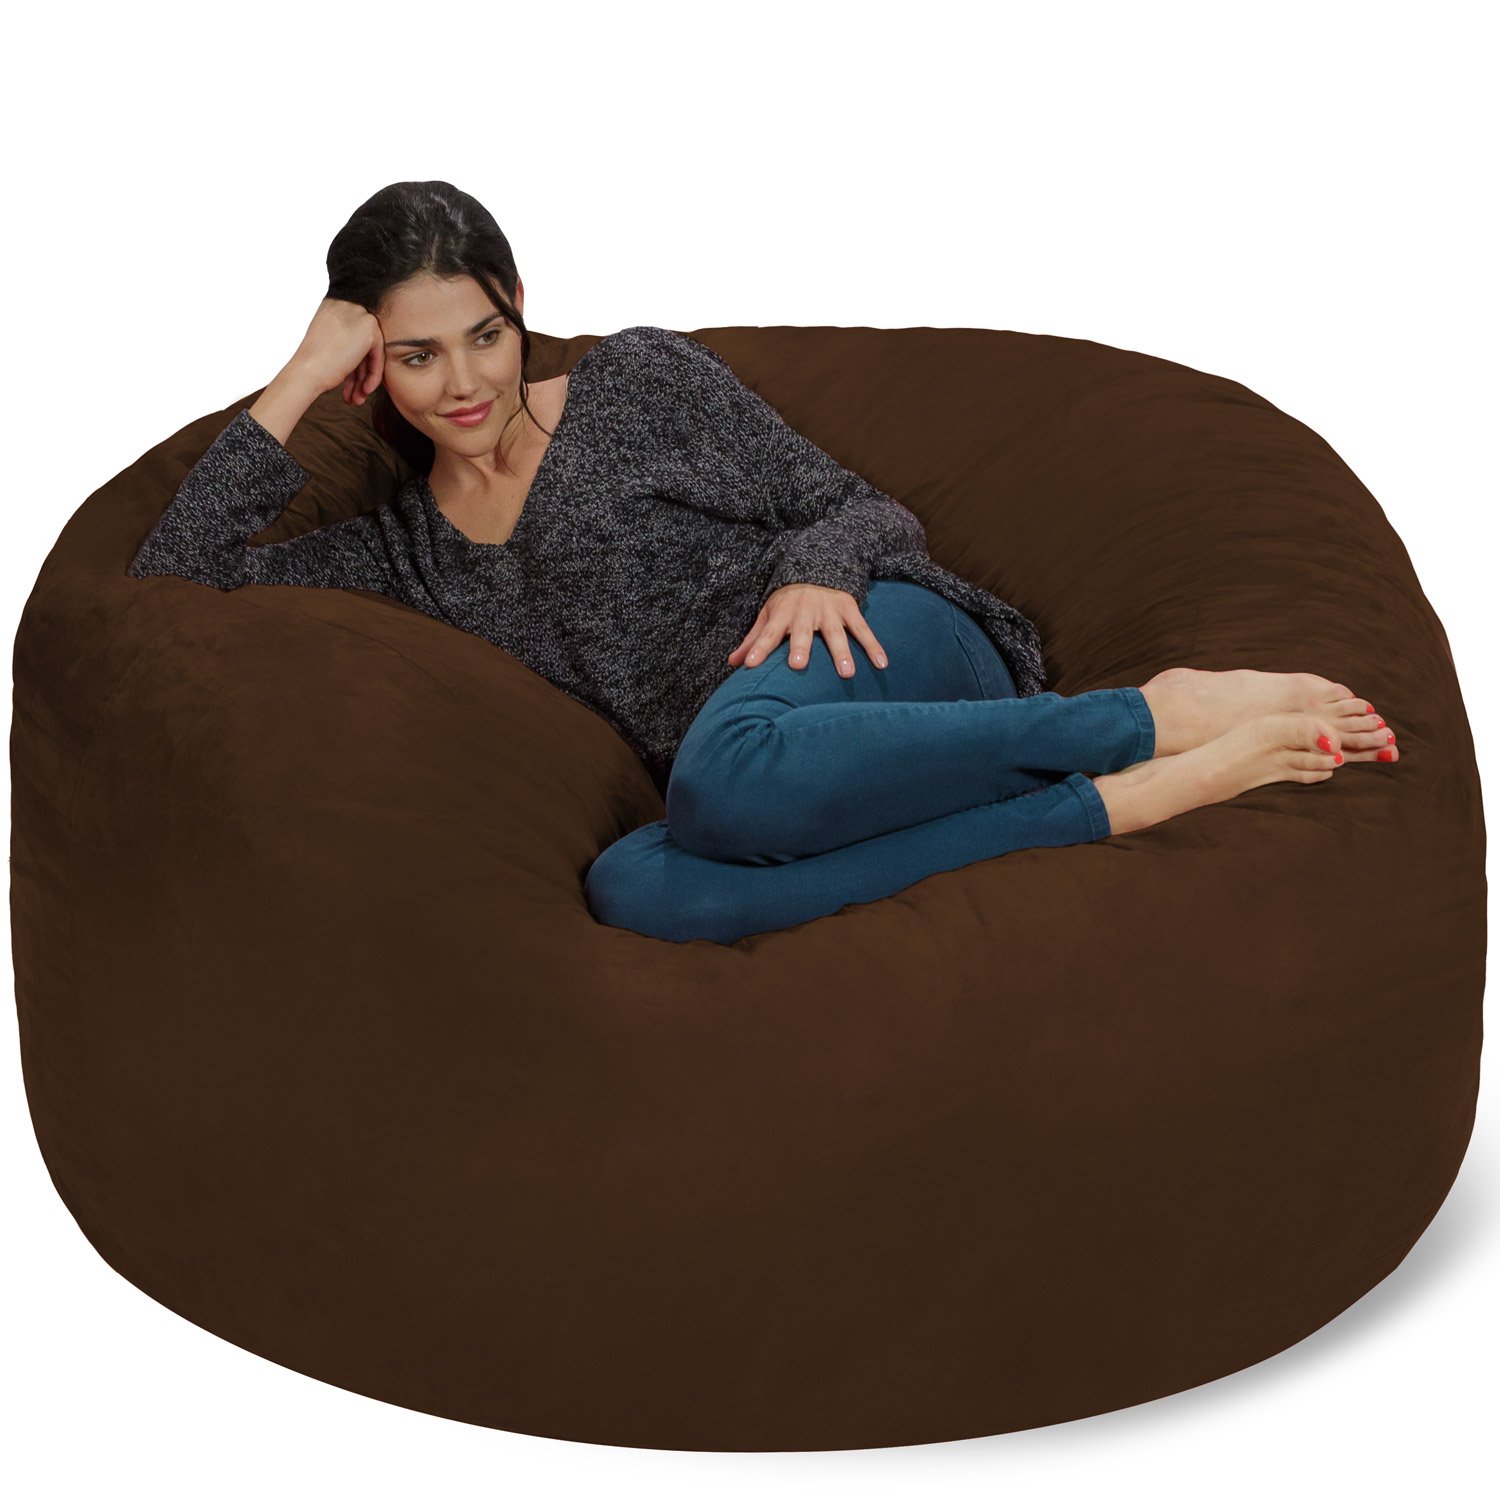 Chill Sack Bean Bag Chair: Giant 5' Memory Foam Furniture Bean Bag - Big Sofa With Soft Micro Fiber Cover - Chocolate